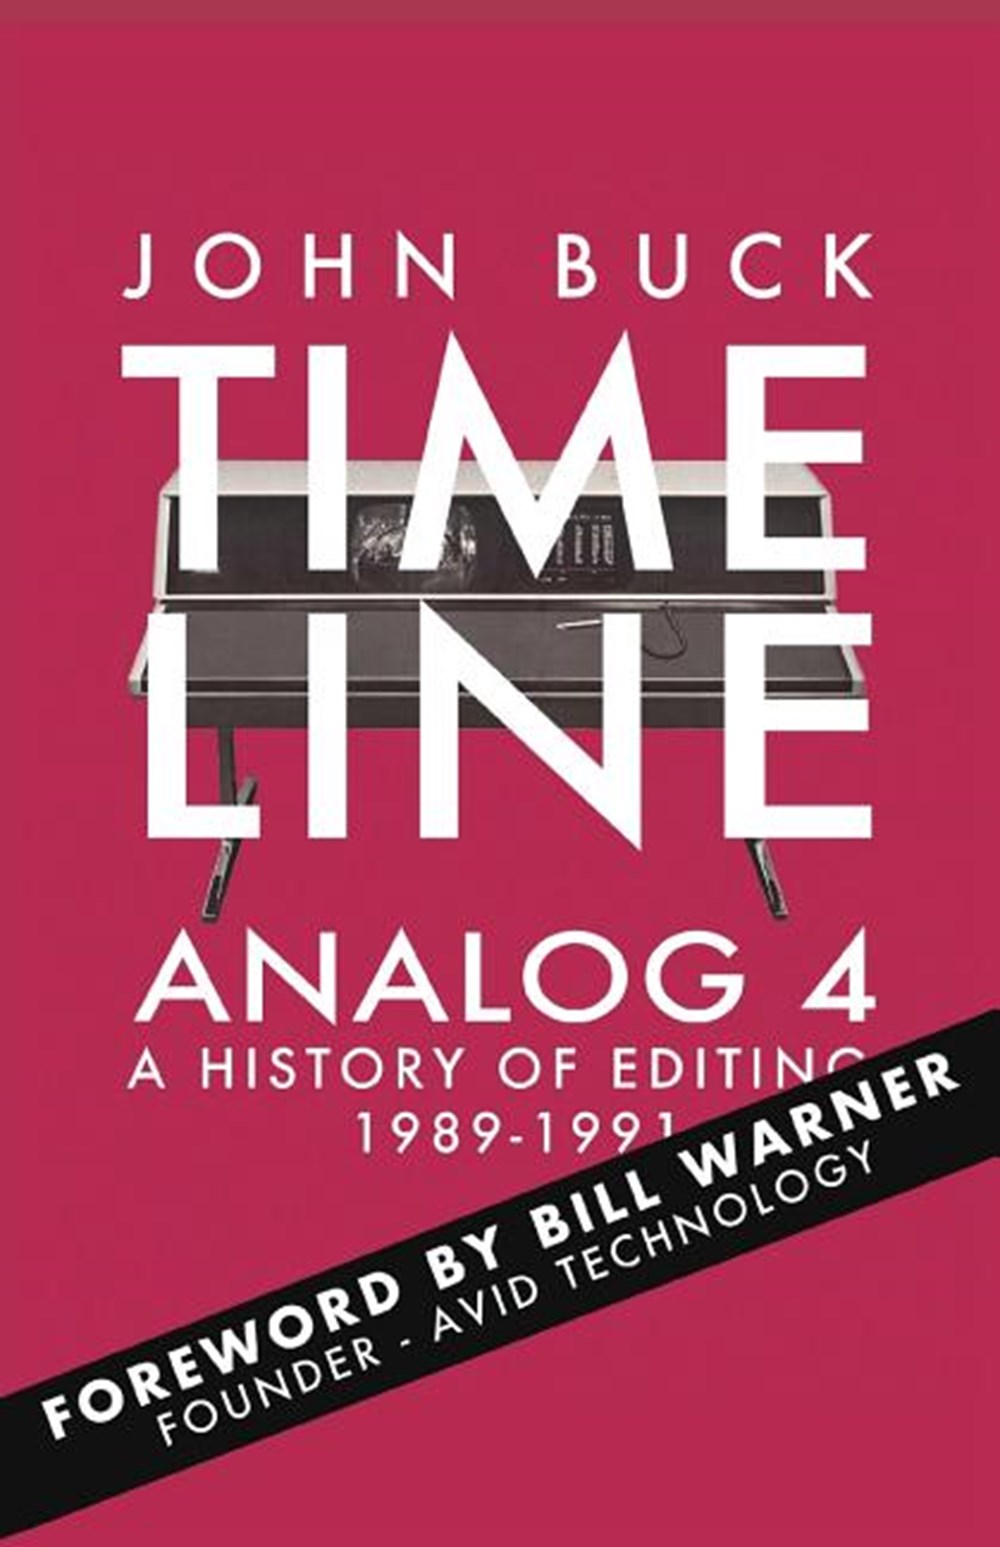 Timeline Analog 4: 1989-1991